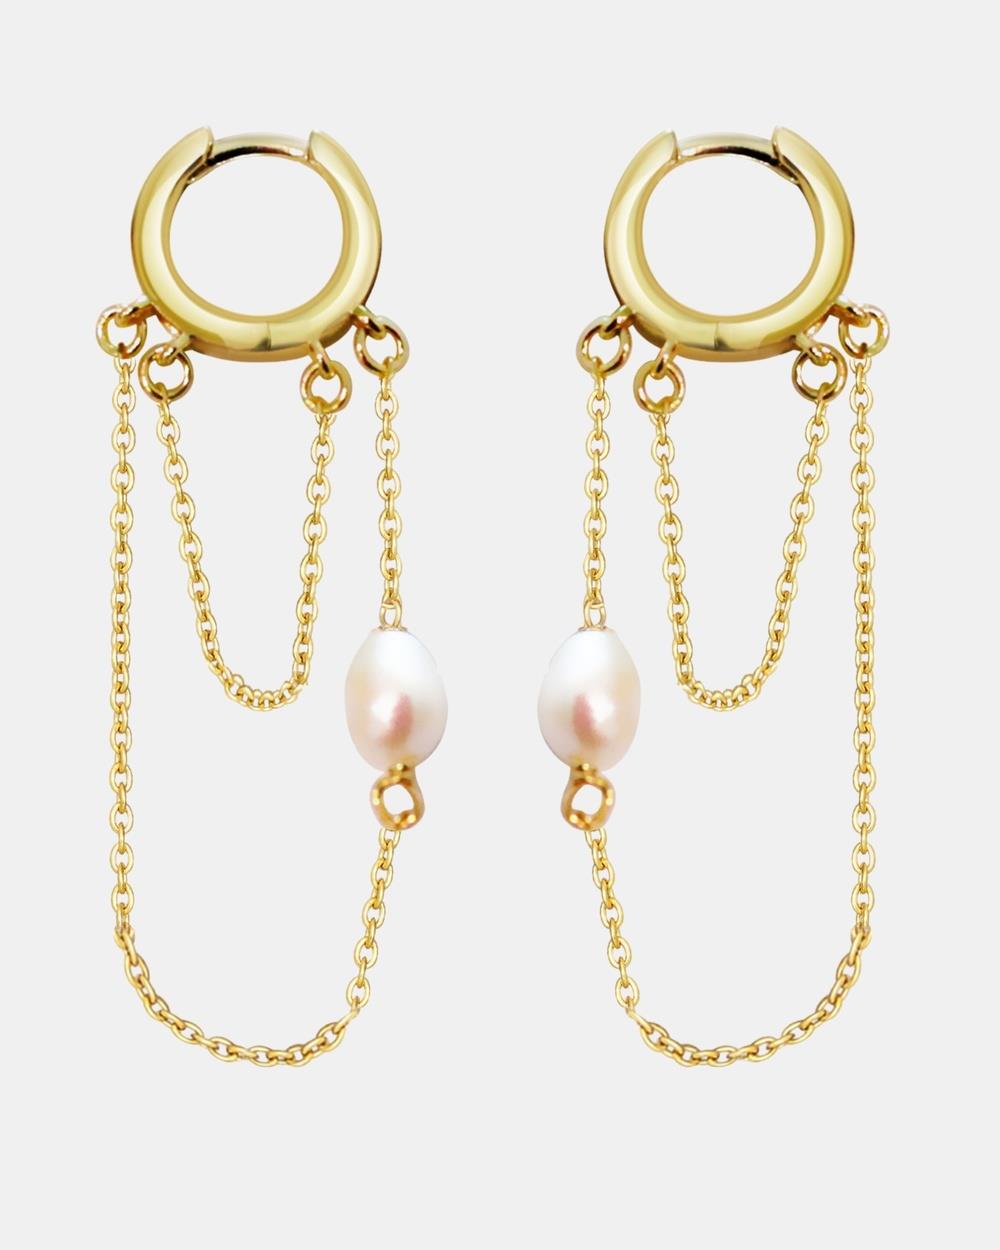 BIANKO - Rebecca Chain Earrings - Jewellery (Yellow Gold) Rebecca Chain Earrings